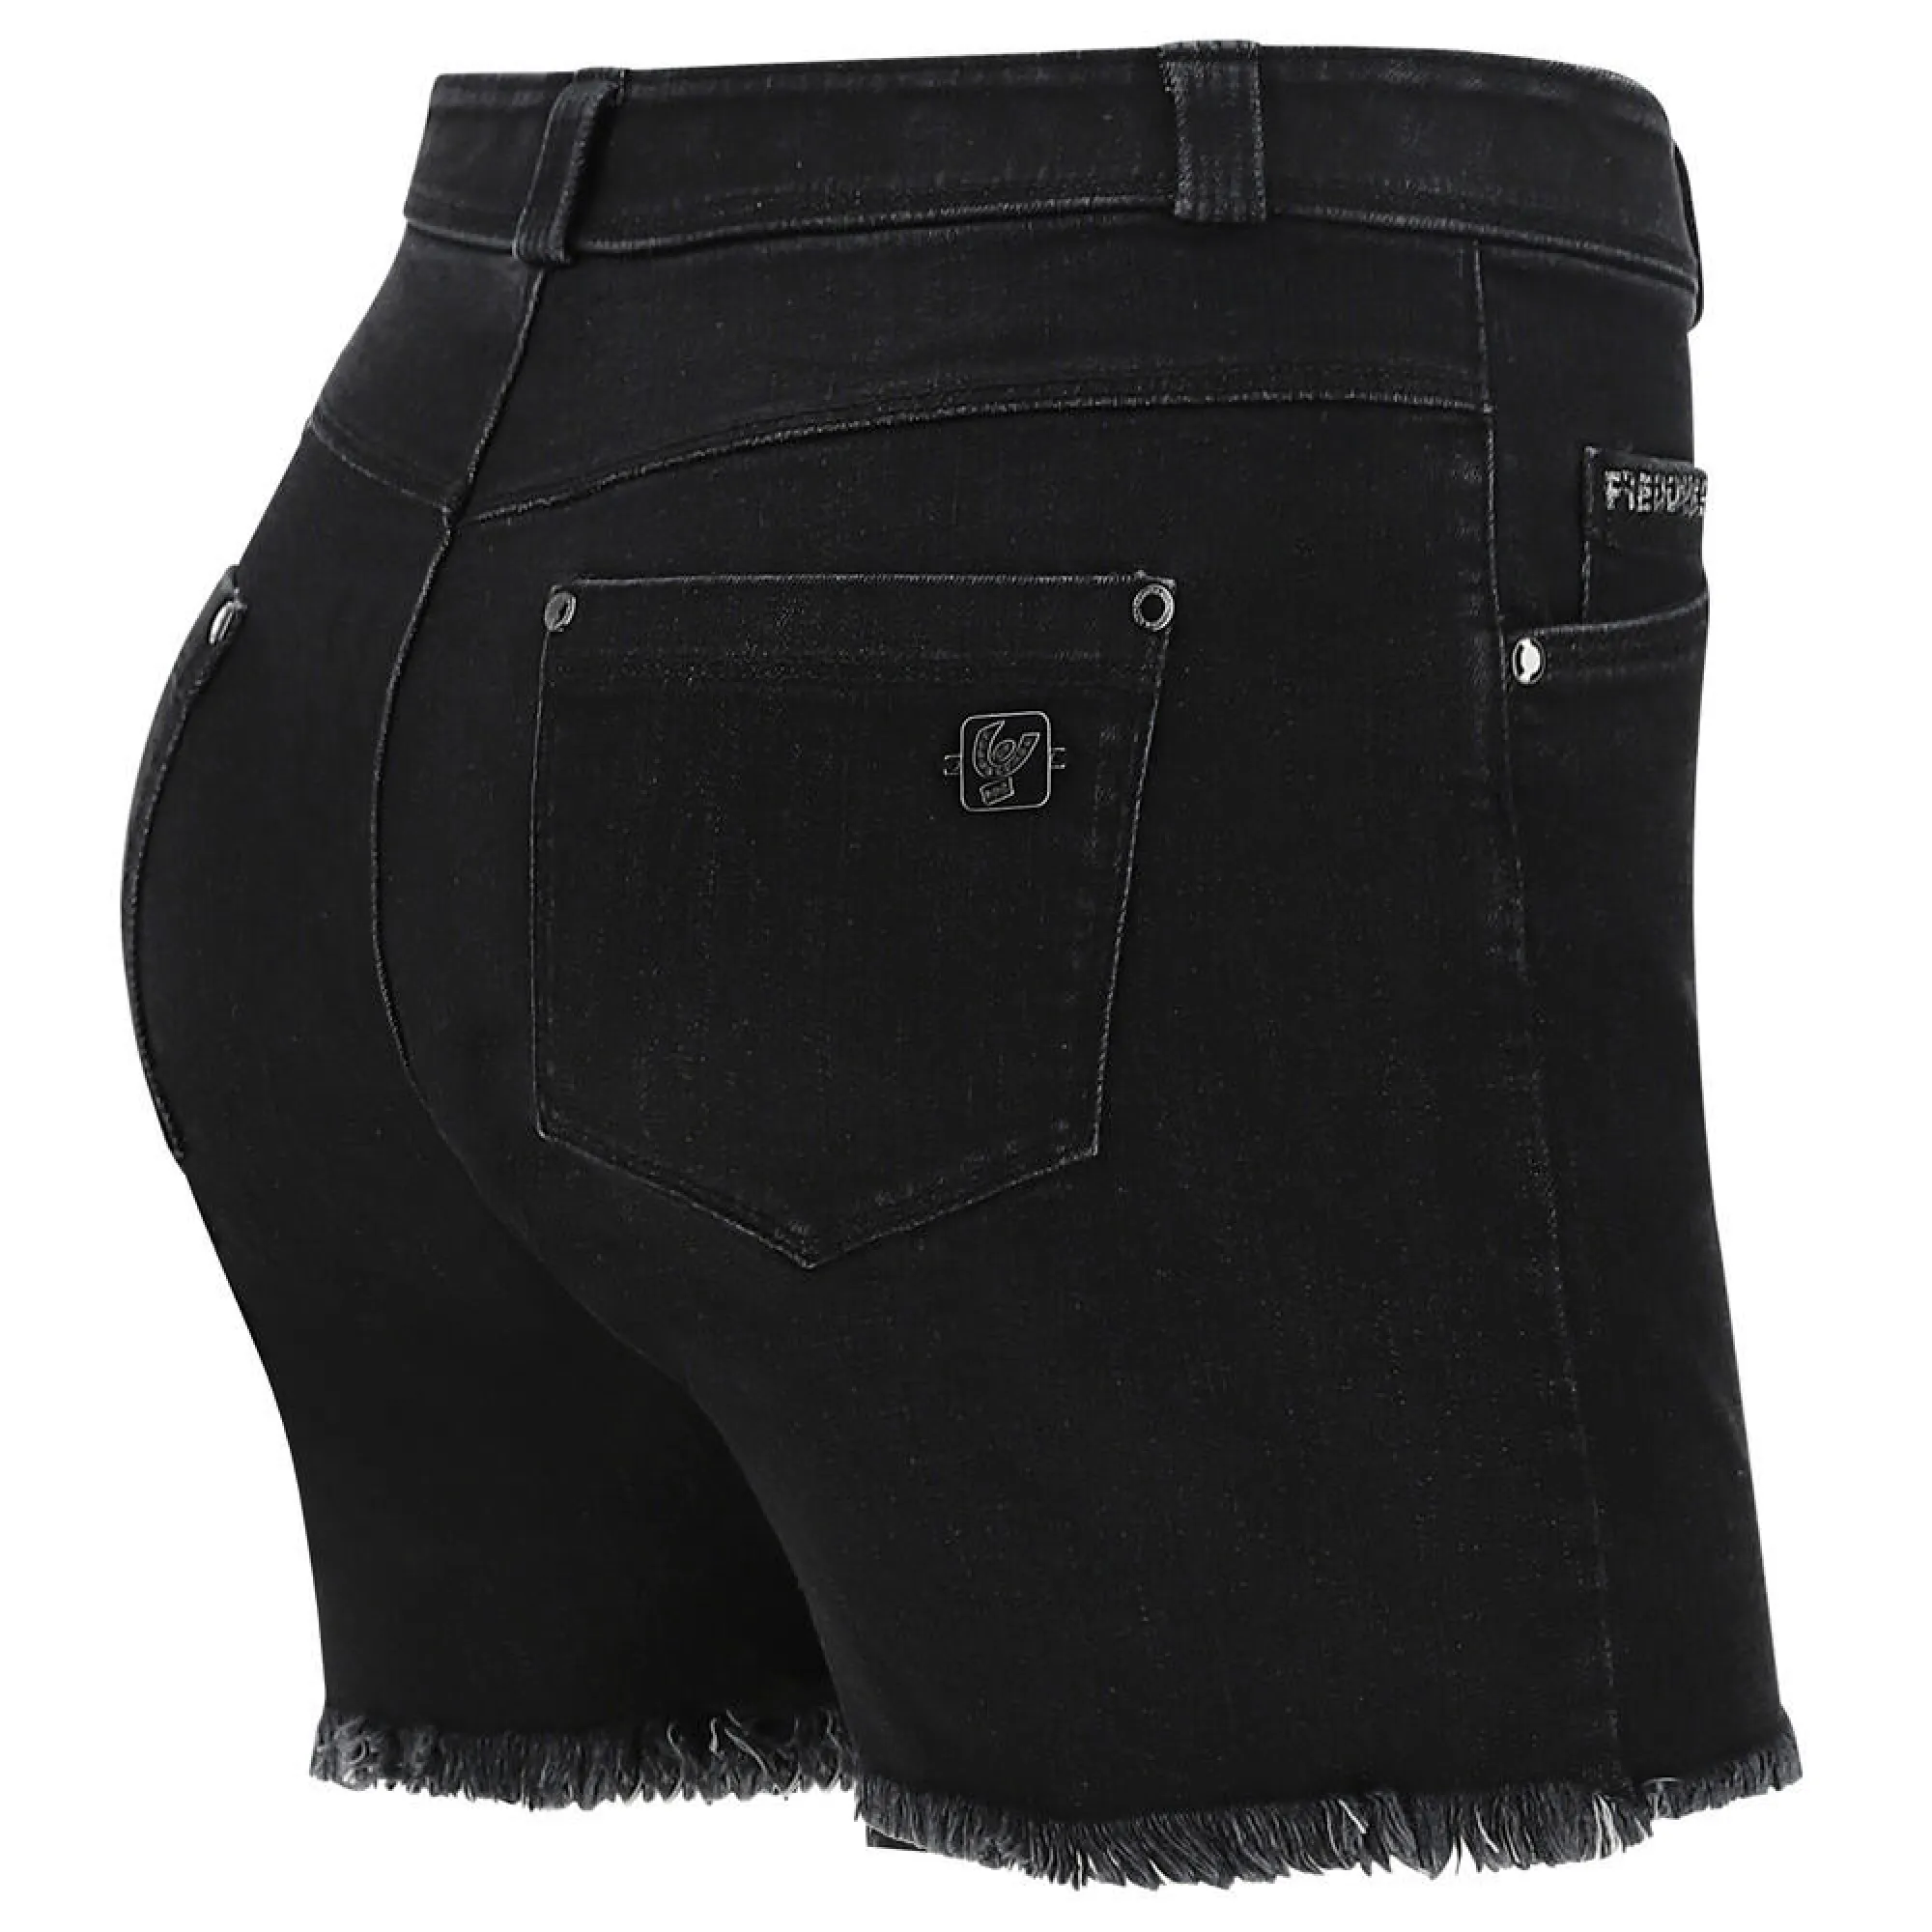 Freddy Fit Jeans-Shorts - Regular Waist - Black Denim – Black Seam - J7N